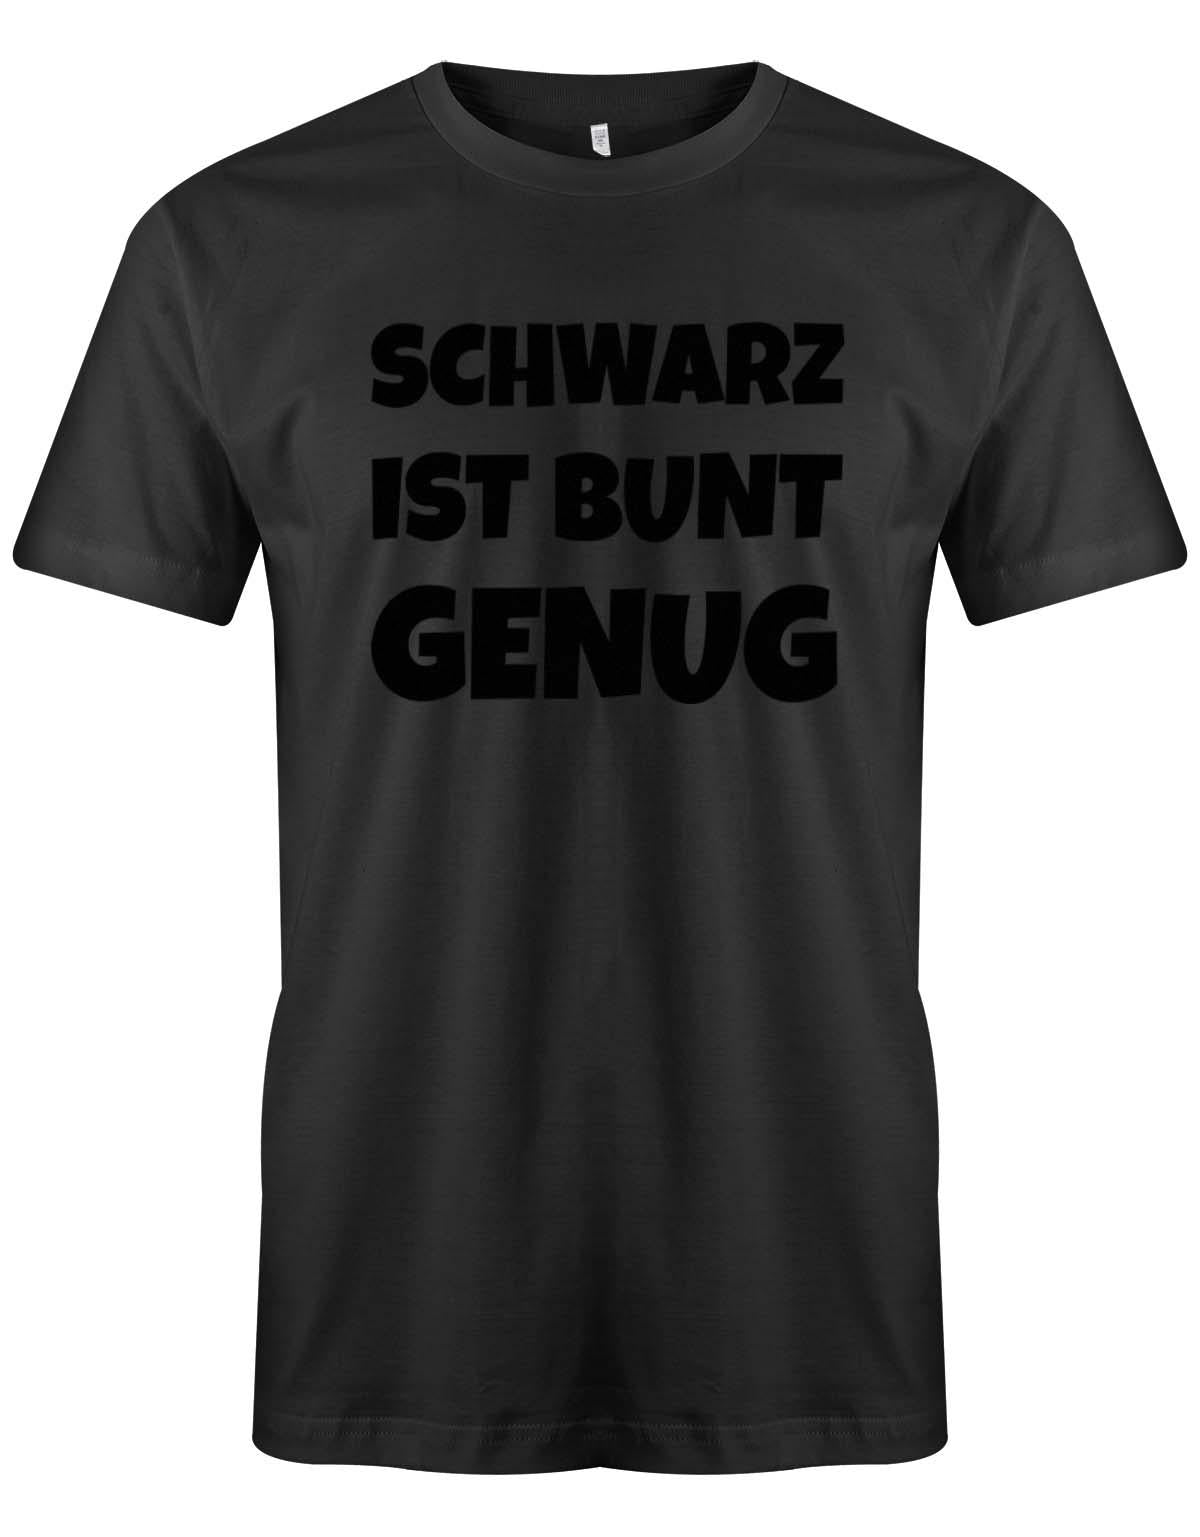 Schwarz-ist-Bunt-genug-herren-Shirt-Schwarz